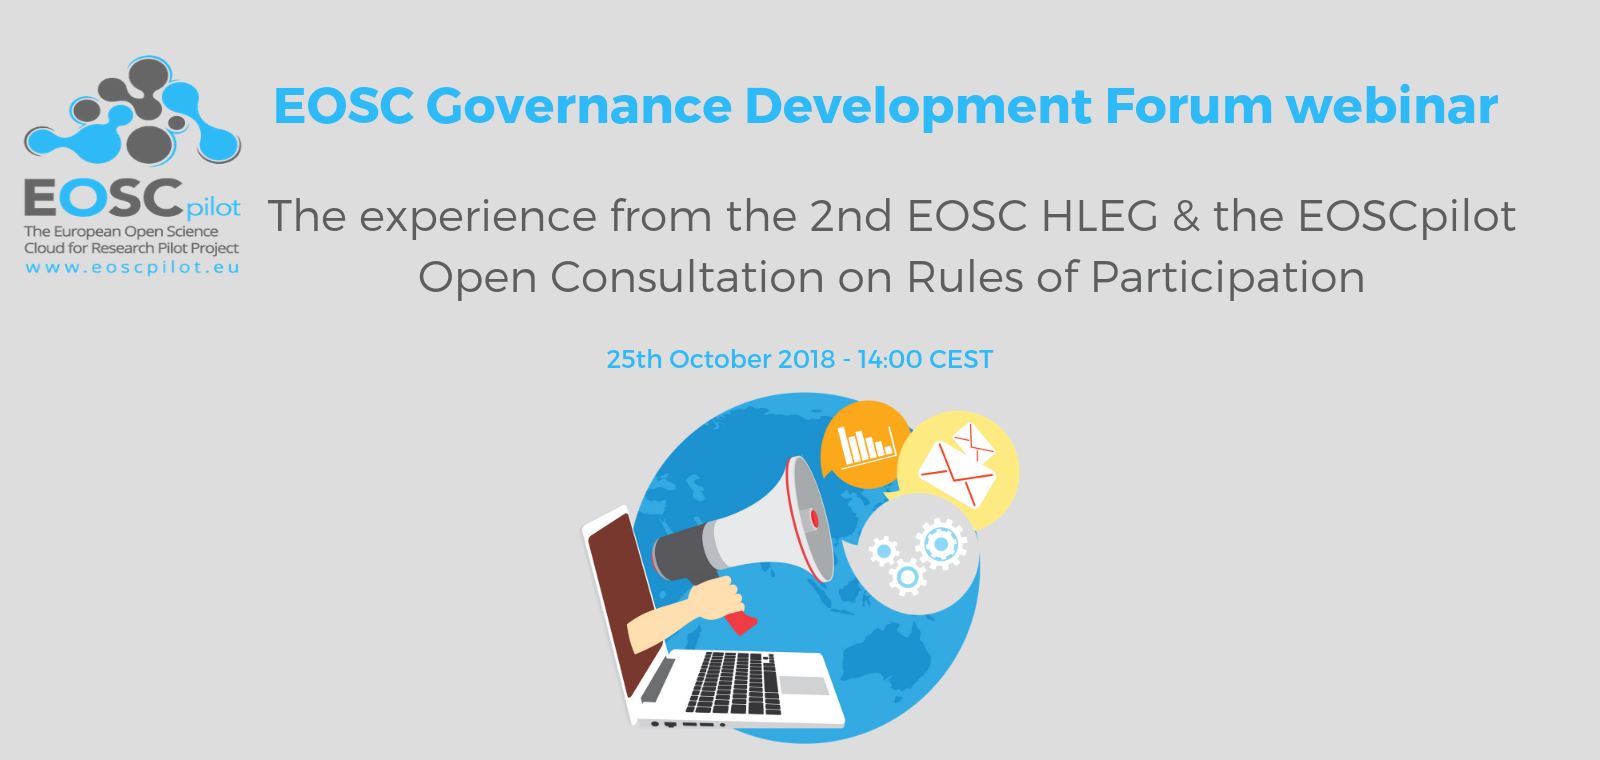 EOSC Governance Development Forum webinar – 25th October 2018